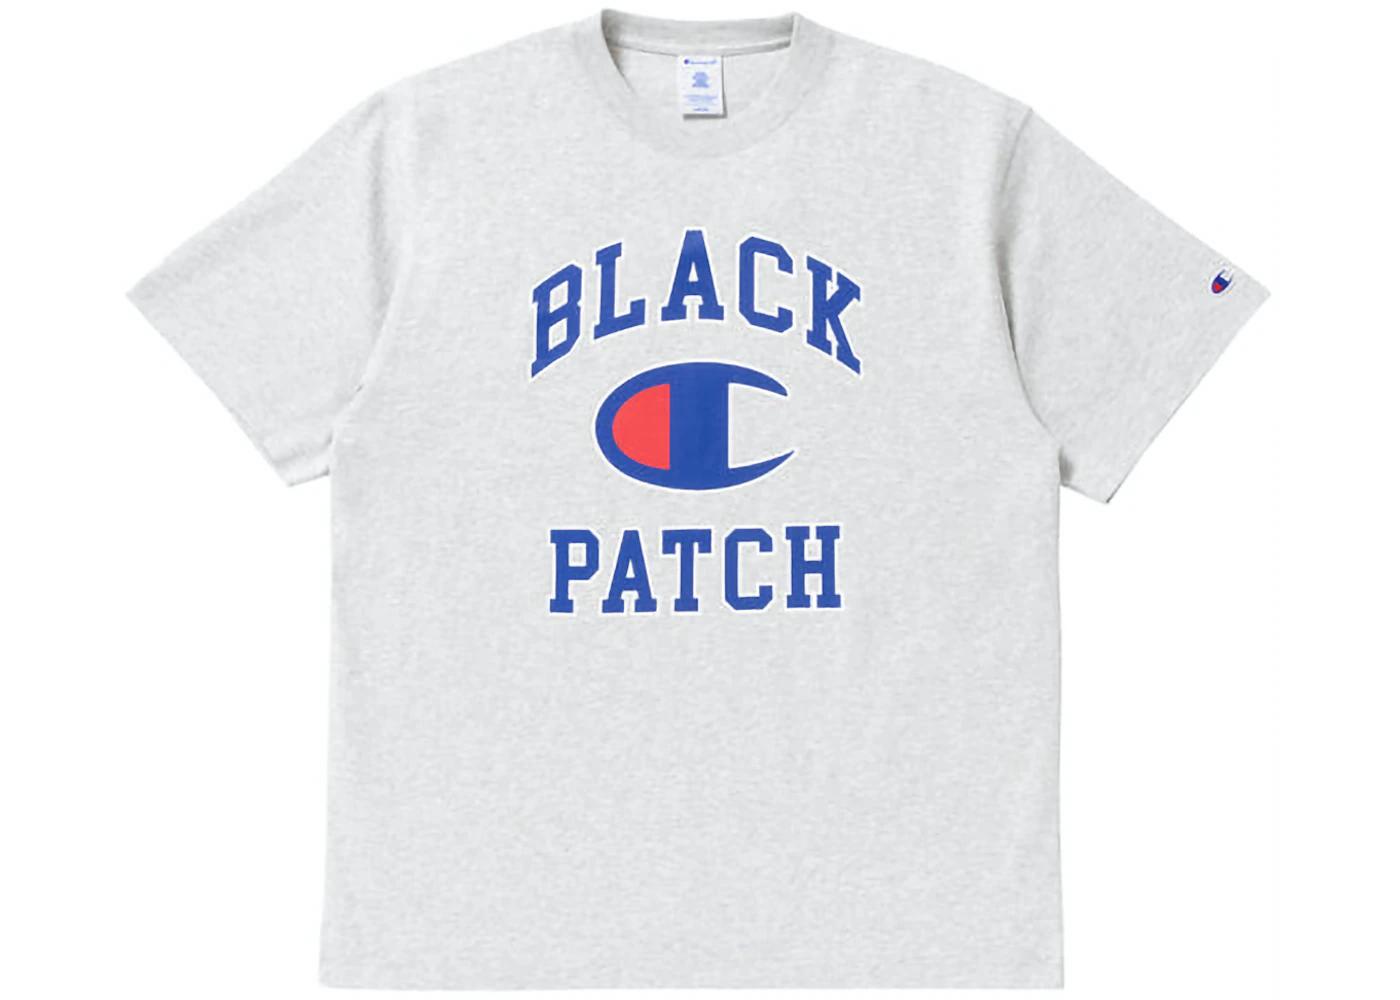 BlackEyePatch x Champion T-Shirt Silver Grey by BLACKEYEPATCH